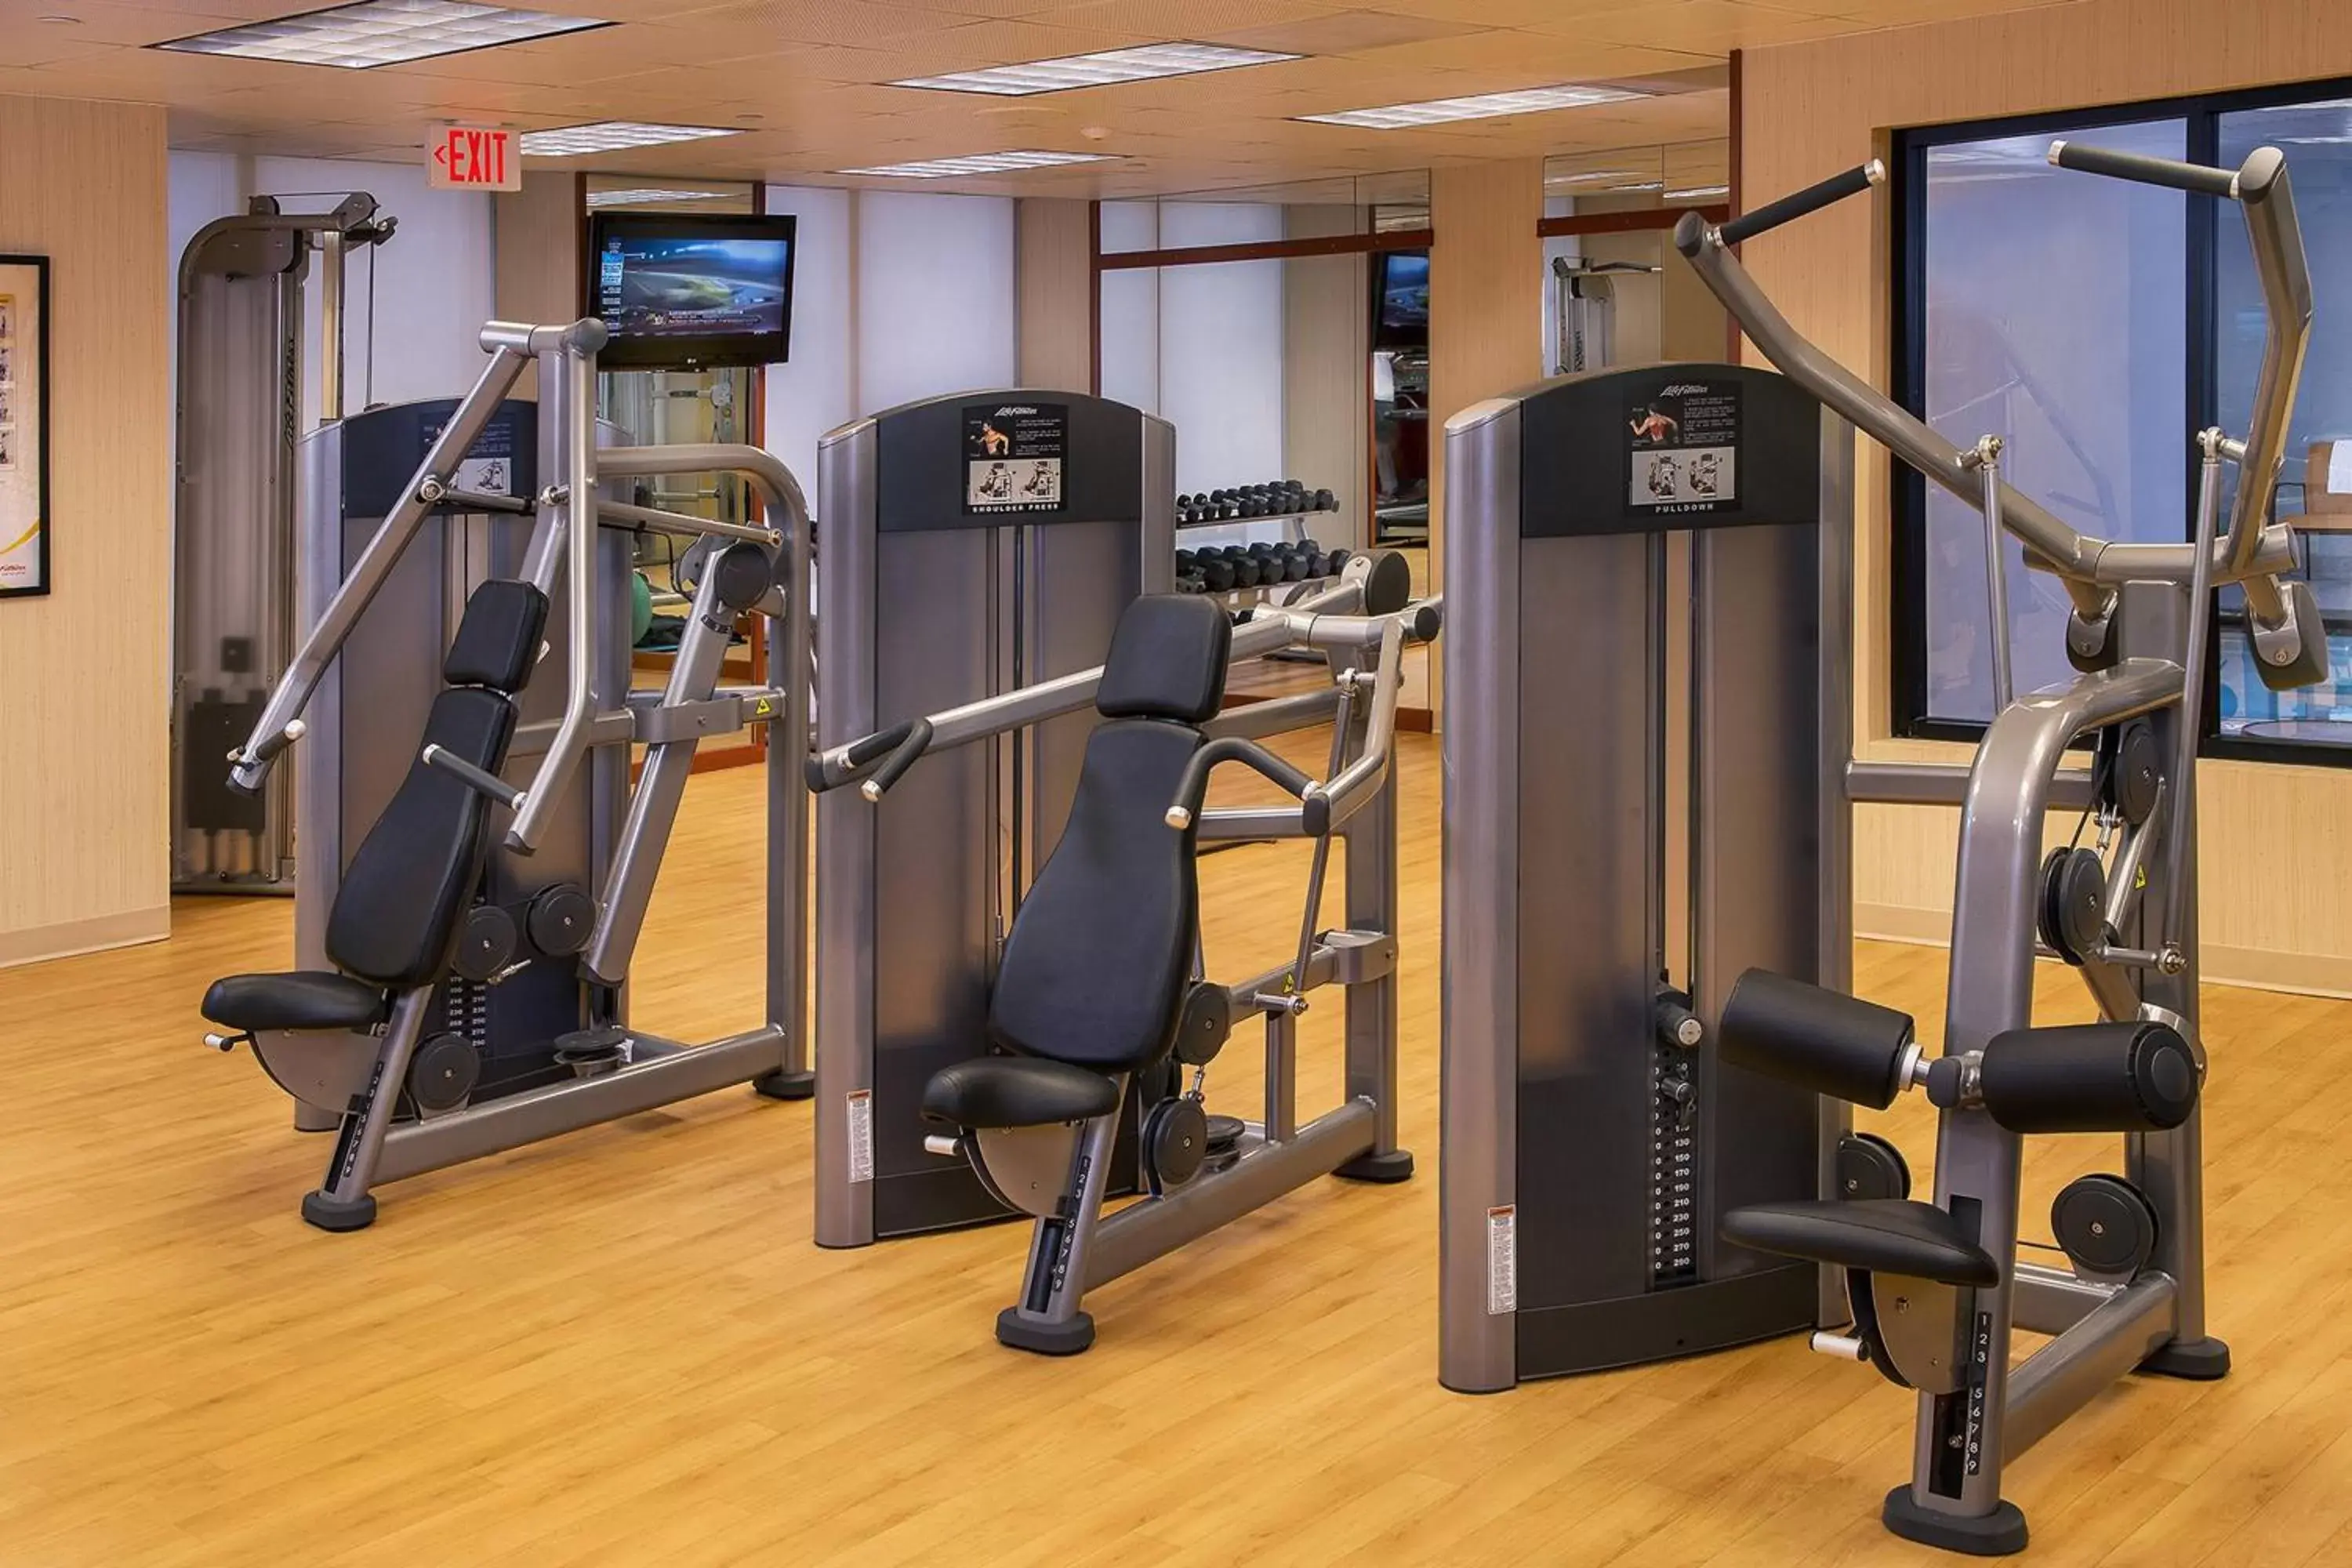 Fitness centre/facilities, Fitness Center/Facilities in Courtyard Arlington Crystal City/Reagan National Airport